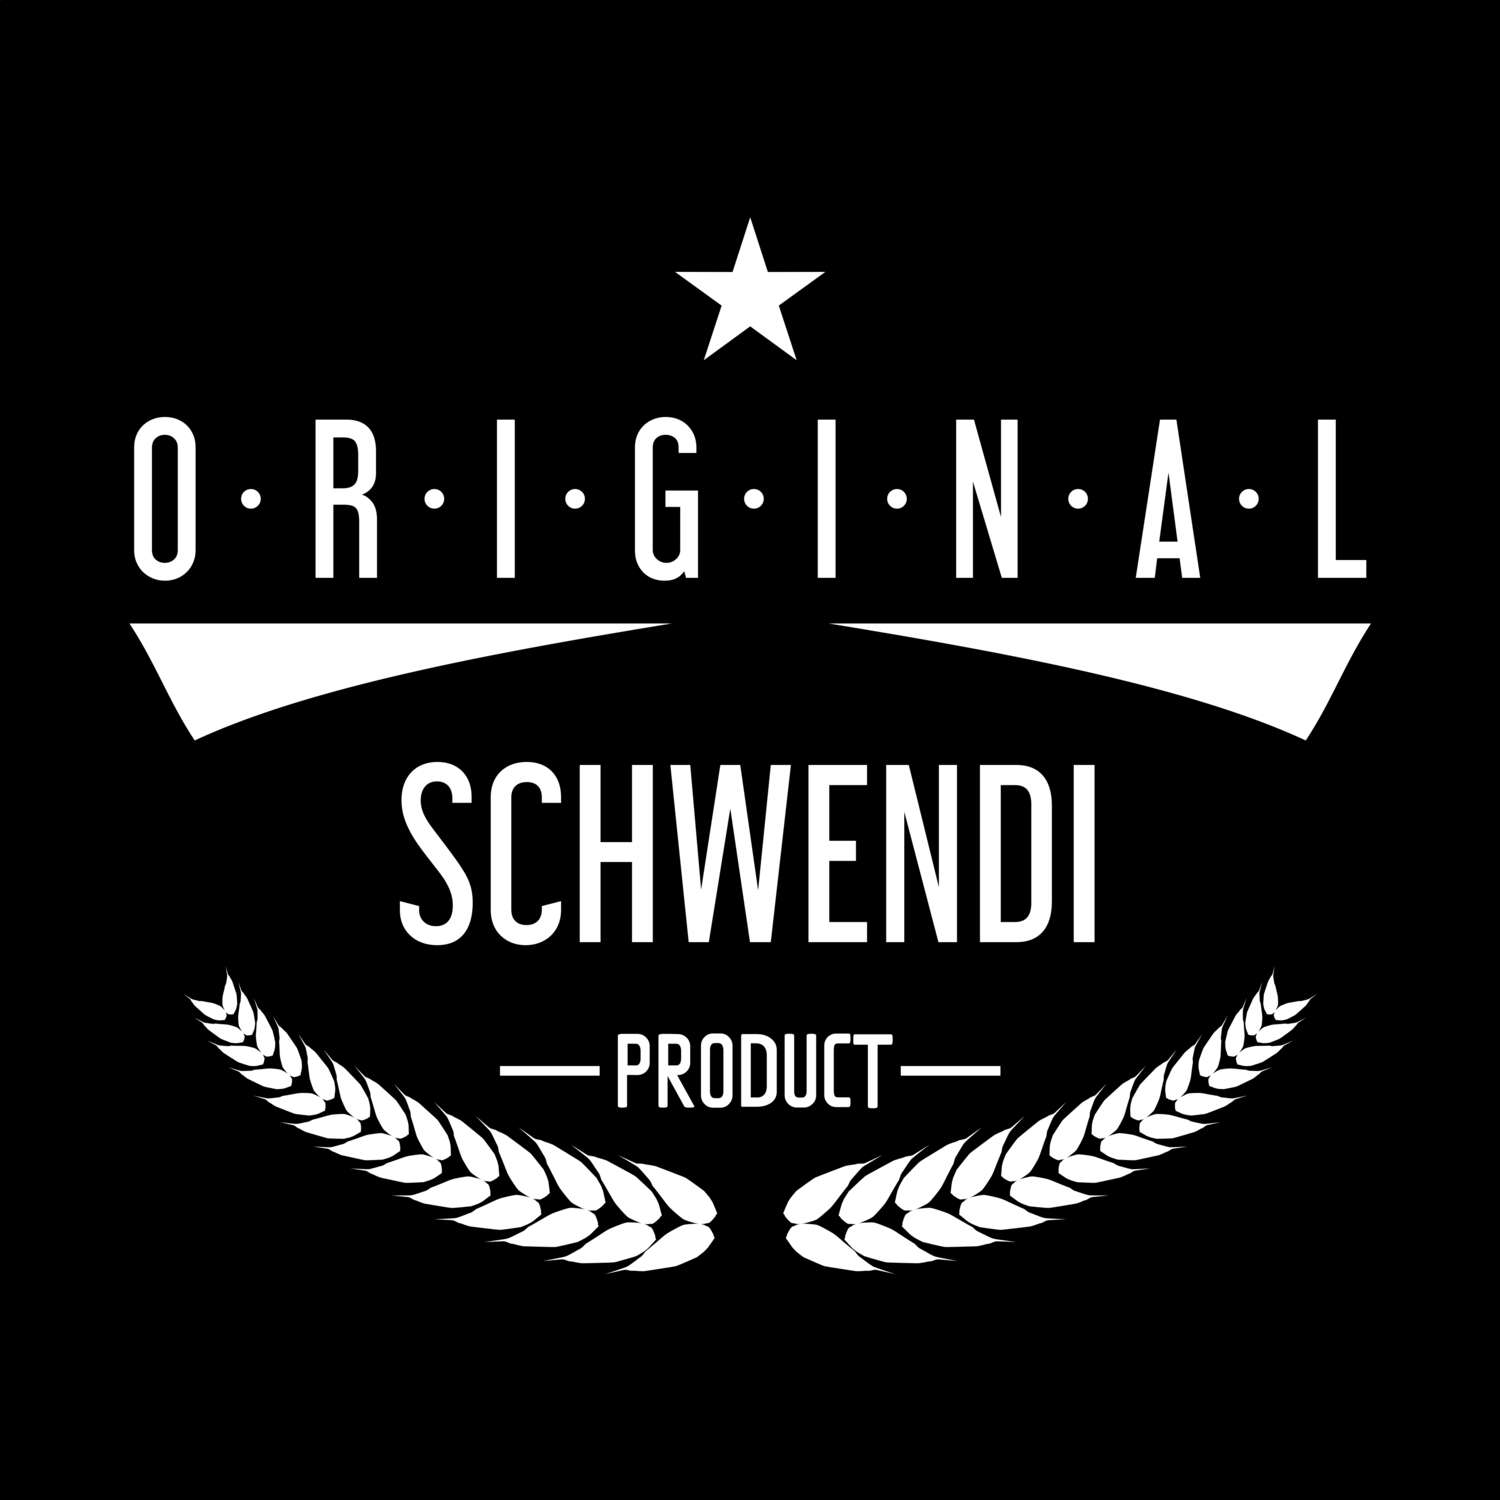 Schwendi T-Shirt »Original Product«